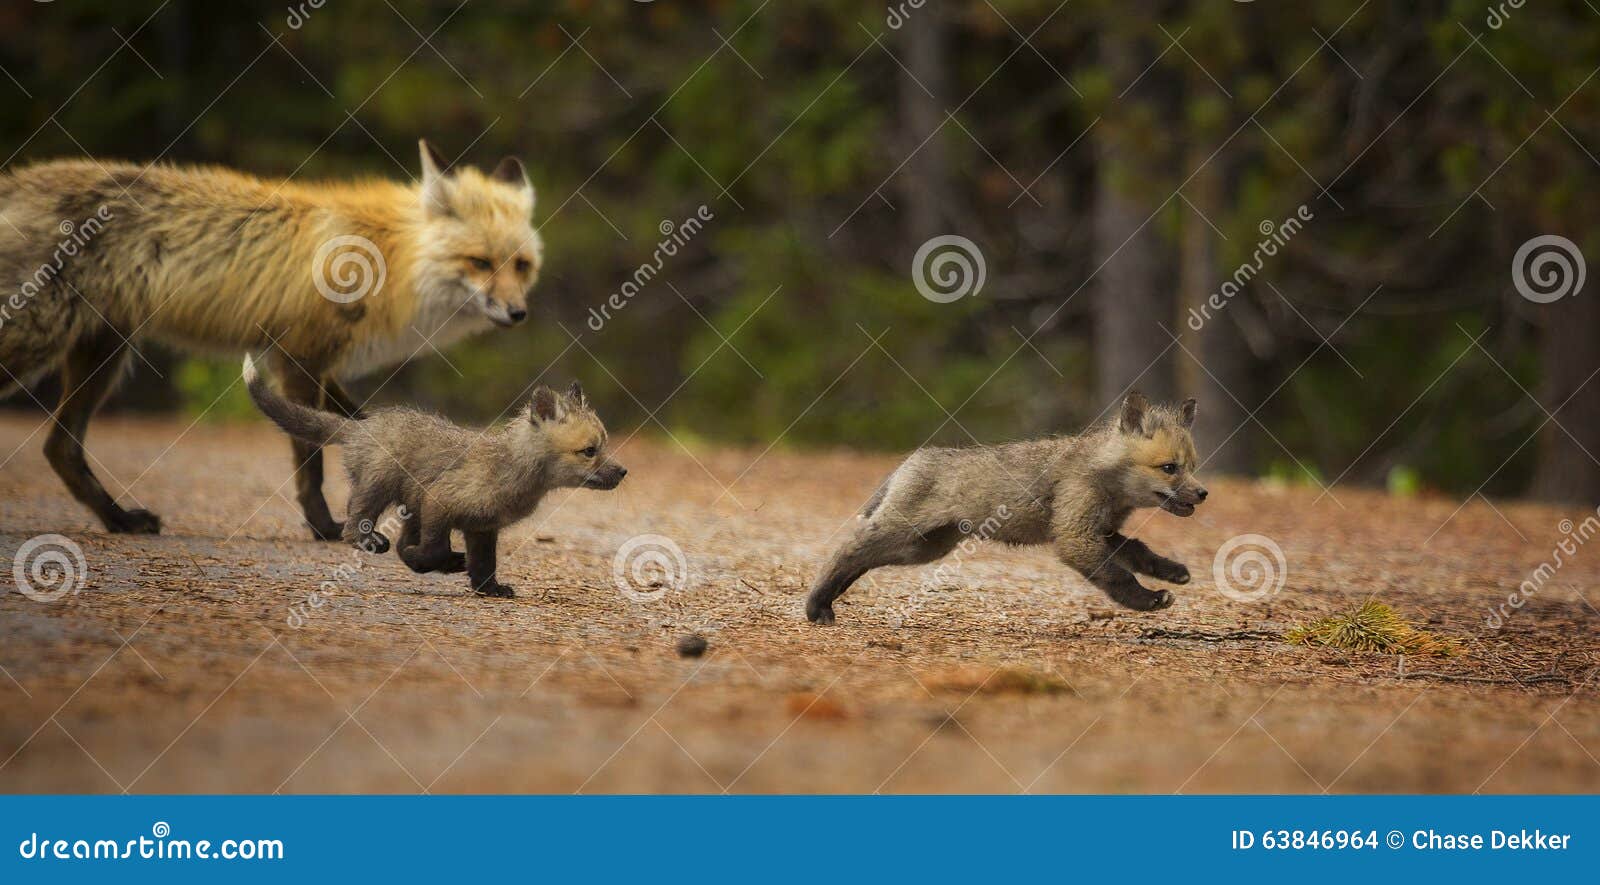 fox chase